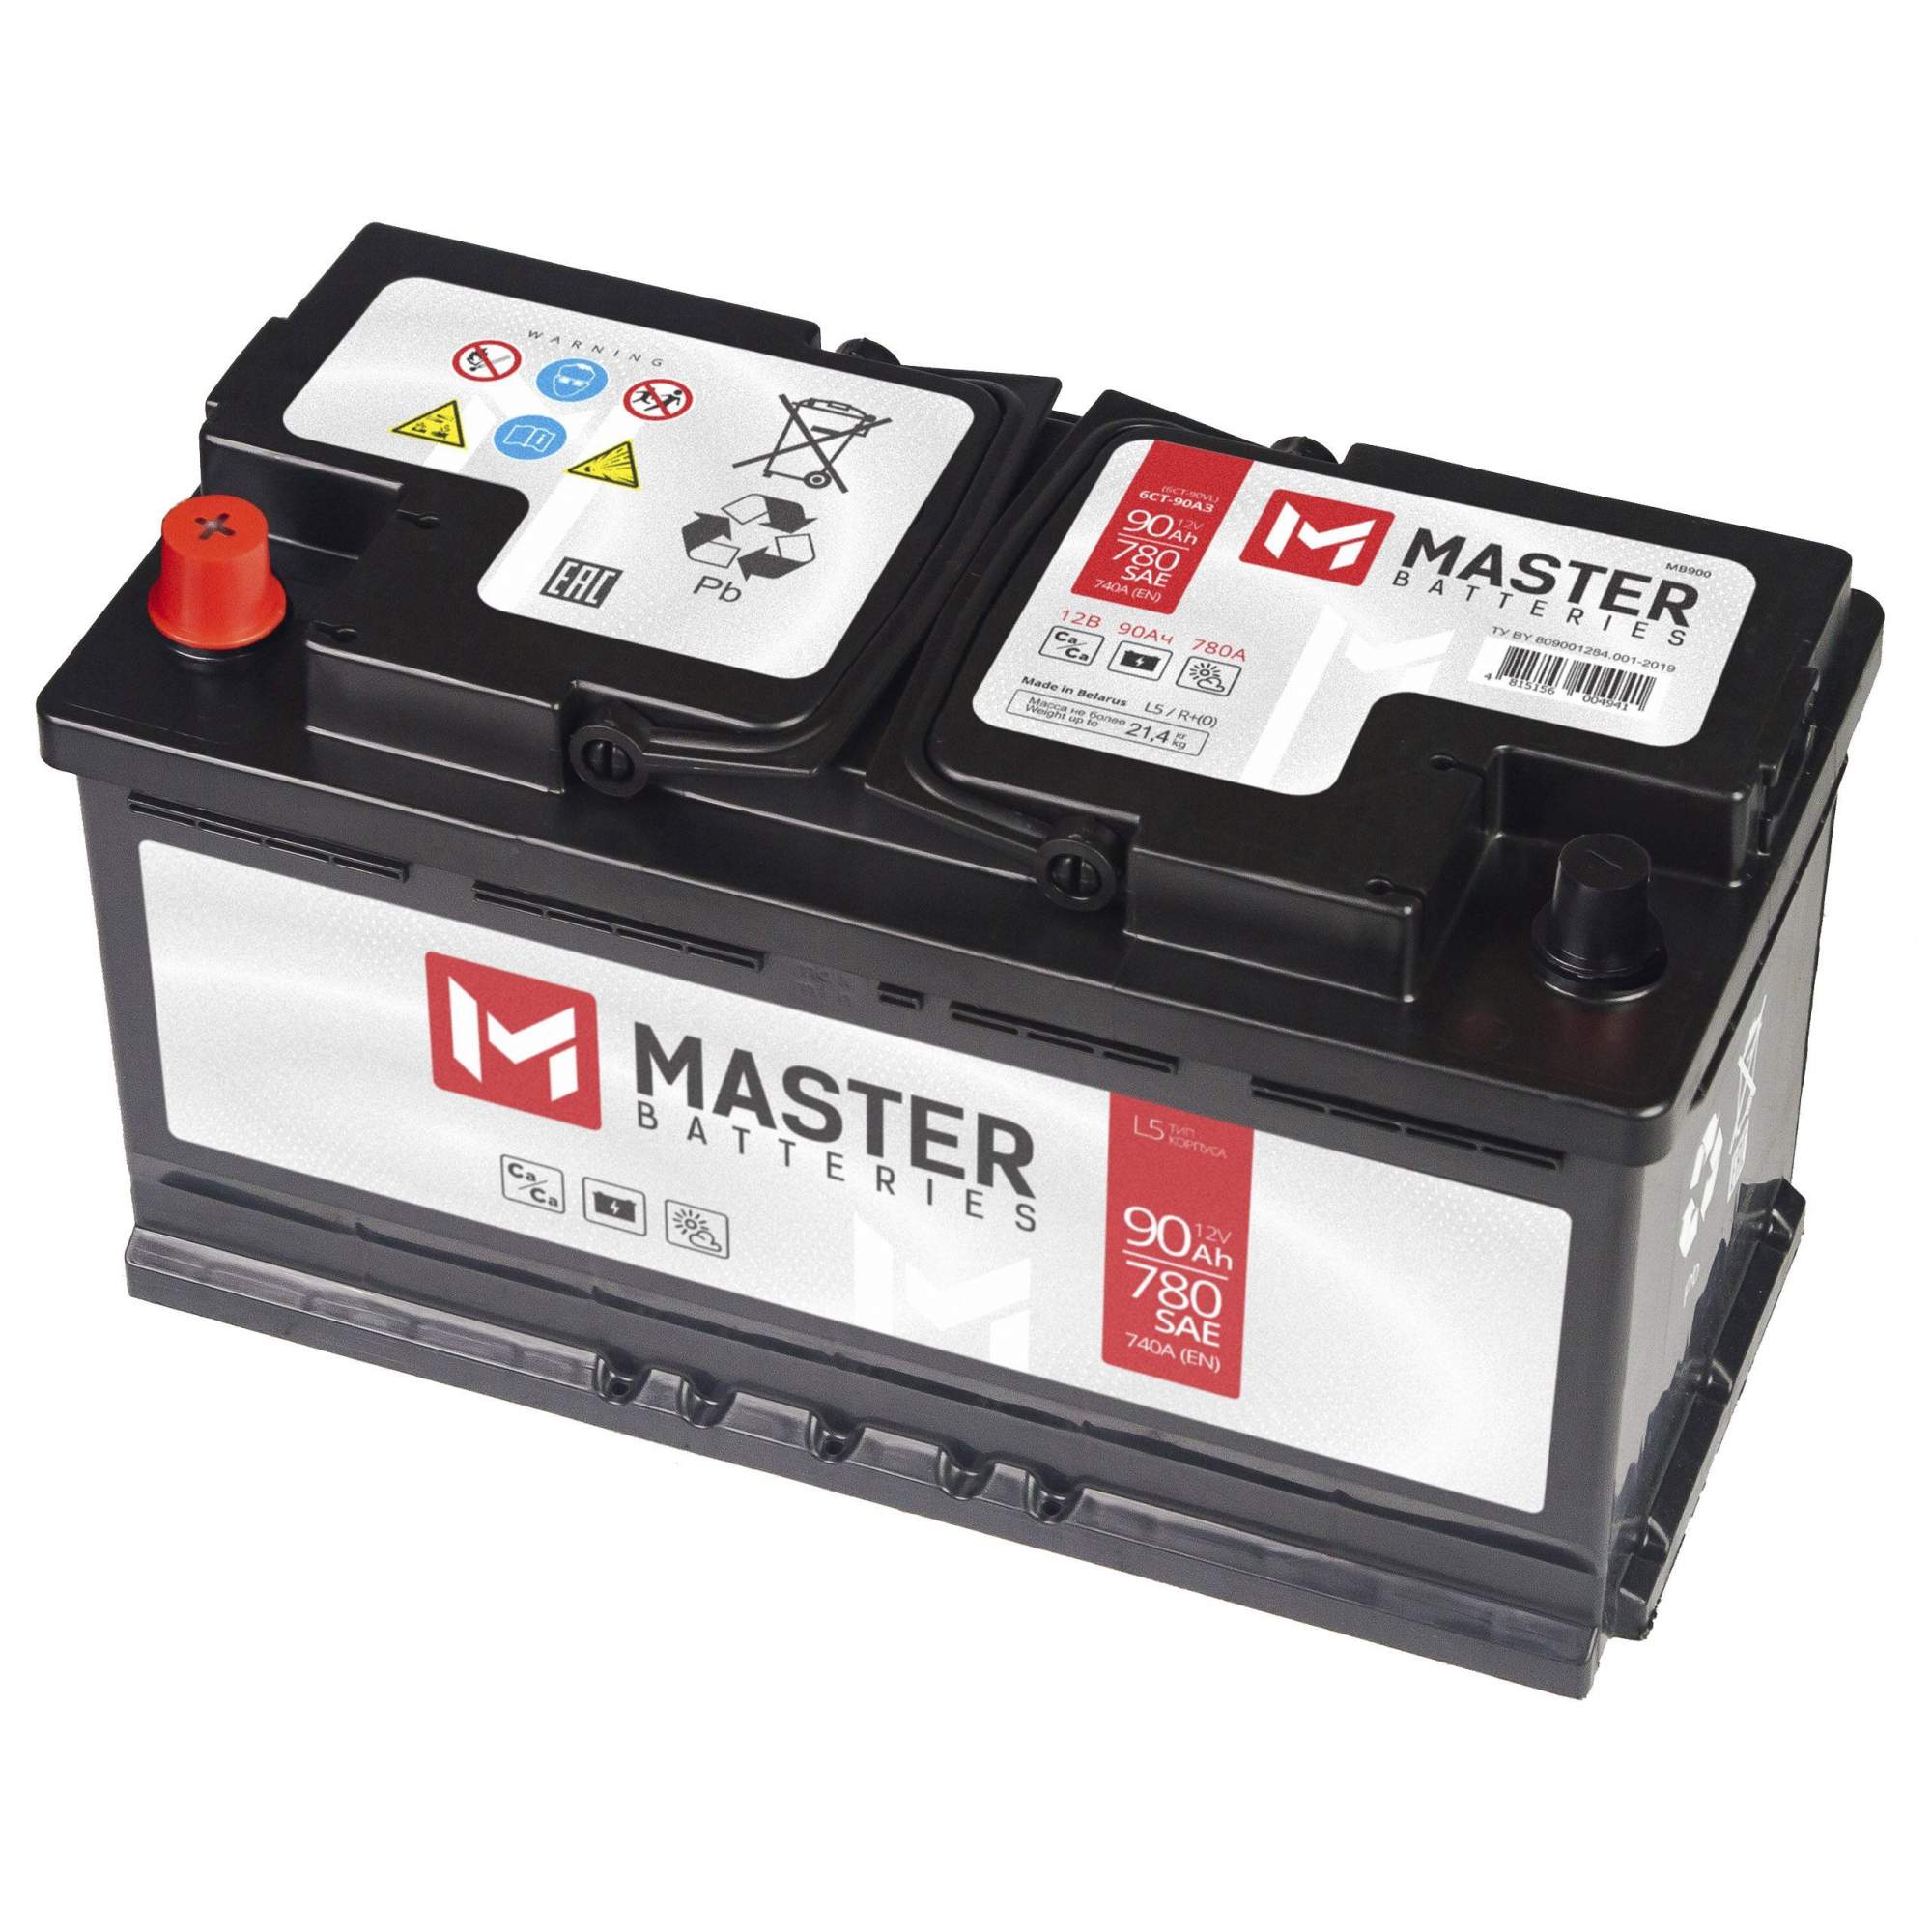 Master batteries. Аккумулятор Master batteries140 а/ч. Аккумулятор Master Batteries 100 а/ ч. Аккумулятор Master Batteries (60 Ah, 12 v) Обратная. Белорусские аккумуляторы Berg 77ah.